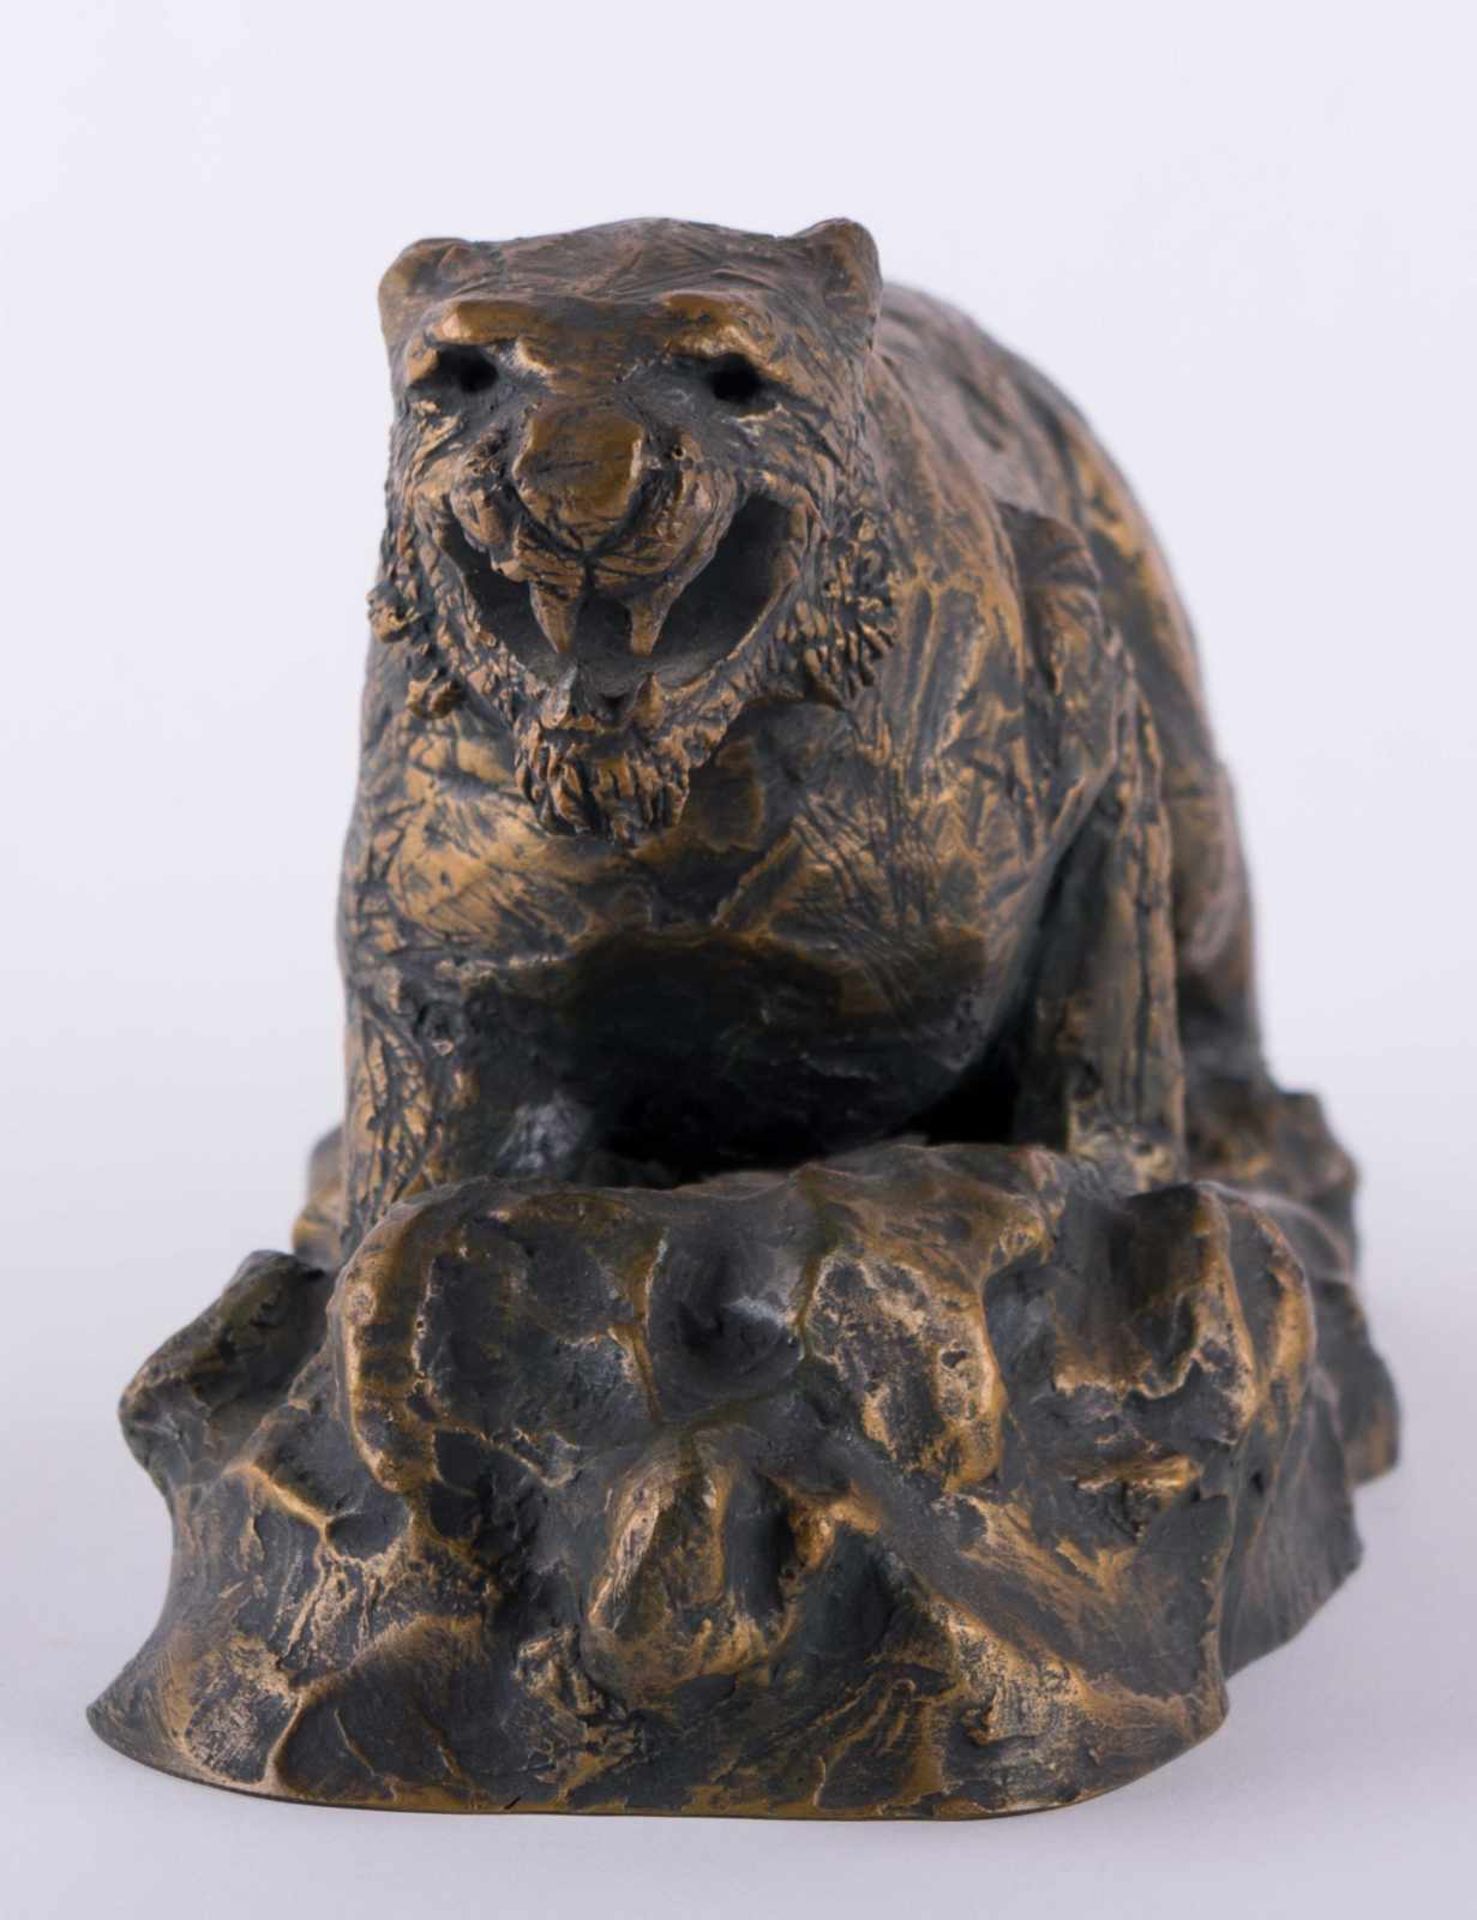 Seibo KITAMURA (1884-1997) "Tiger" Skulptur-Volumen, Bronze, 14,5 cm x 32 cm x 12 cm, signiert - Image 4 of 6